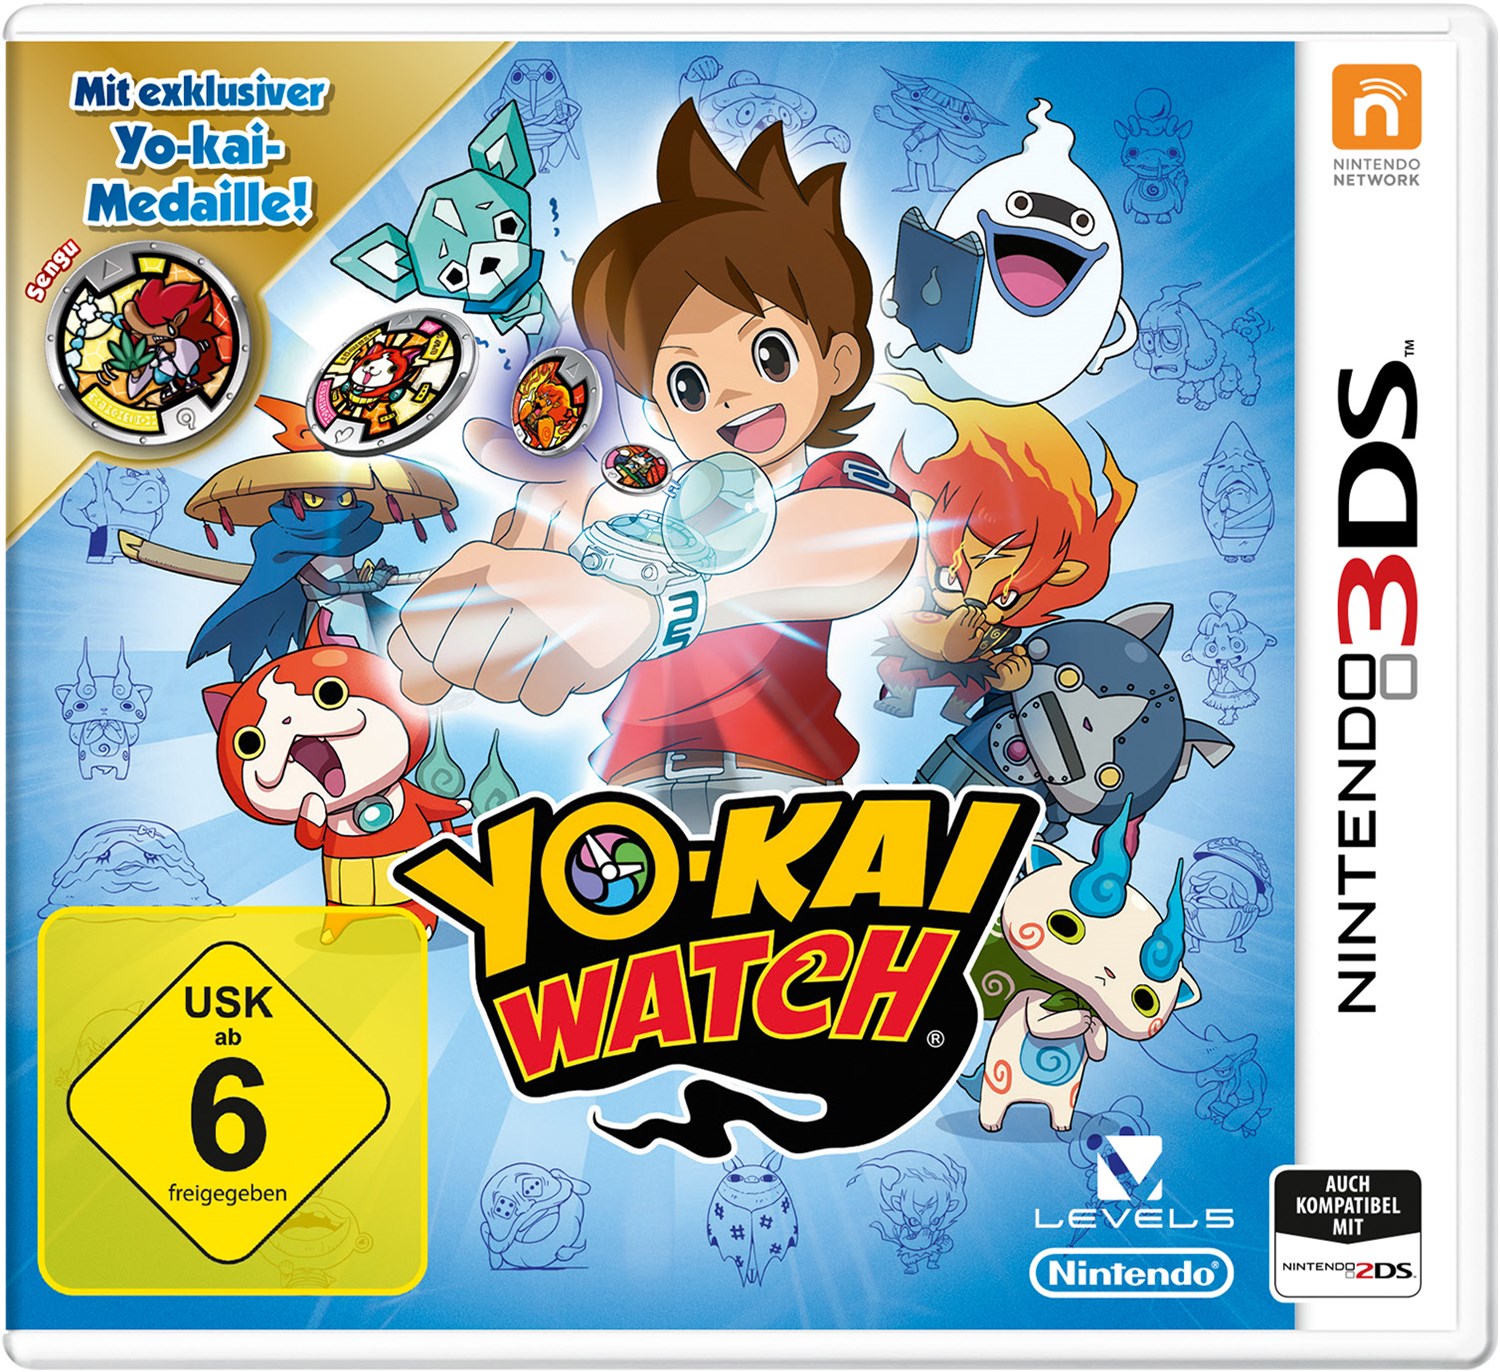 Yo-Kai Watch Special Edition inkl. Medallie